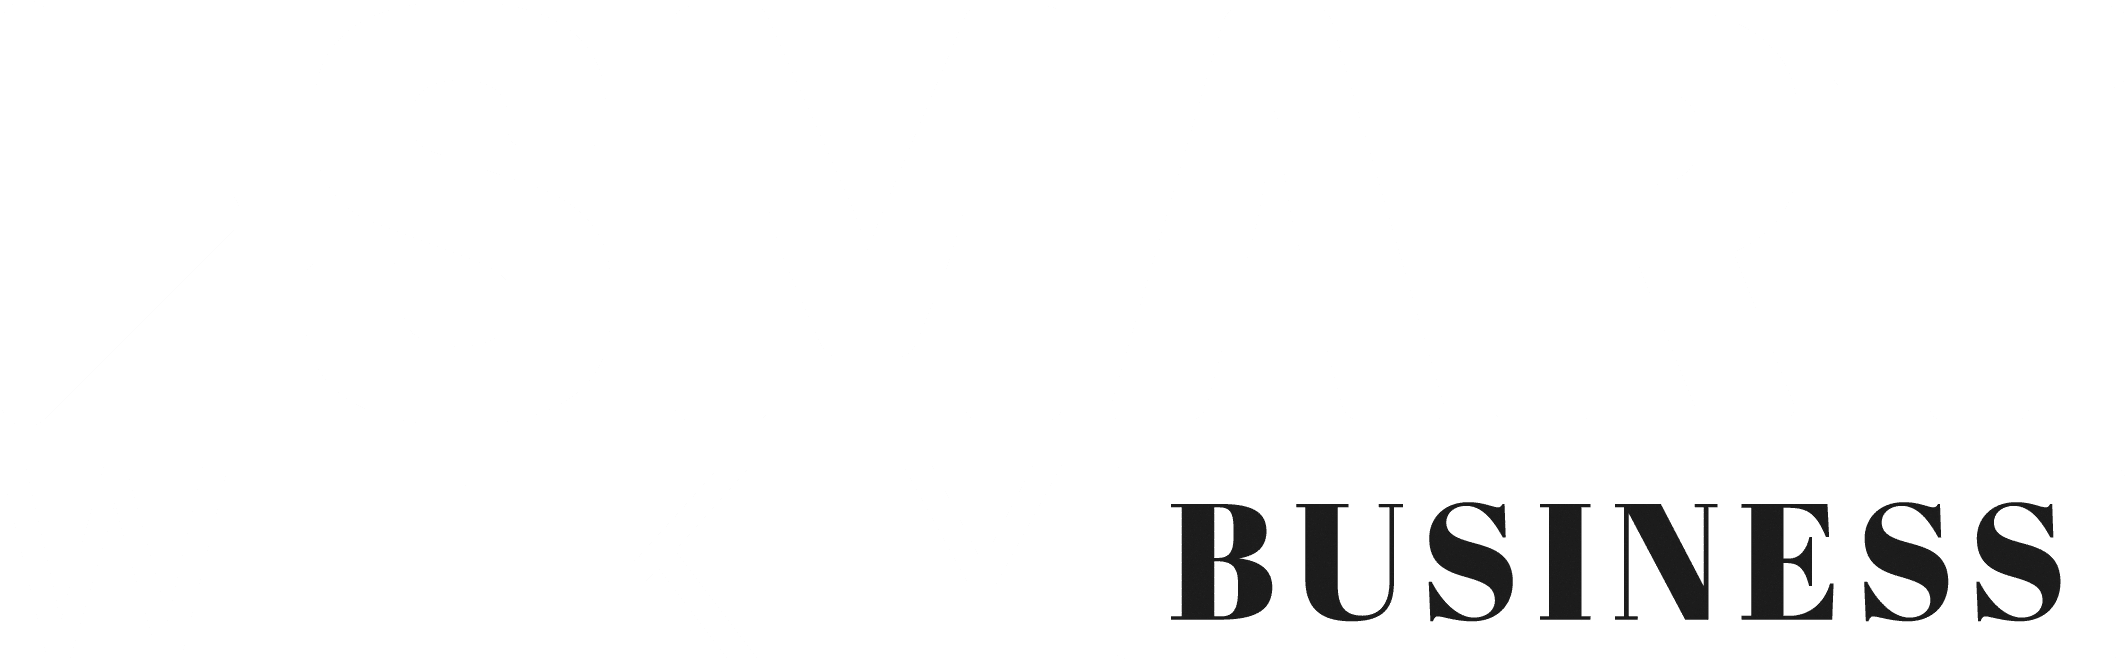 Smart Weekly Business